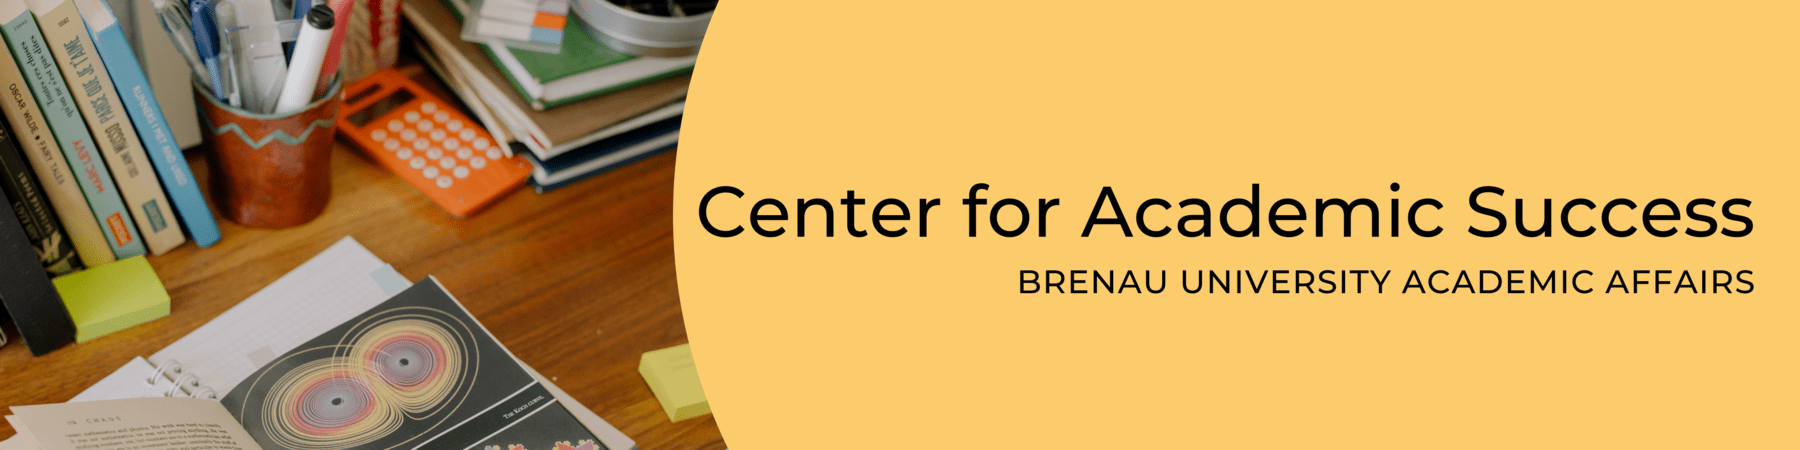 center for academic success brenau university academic affairs